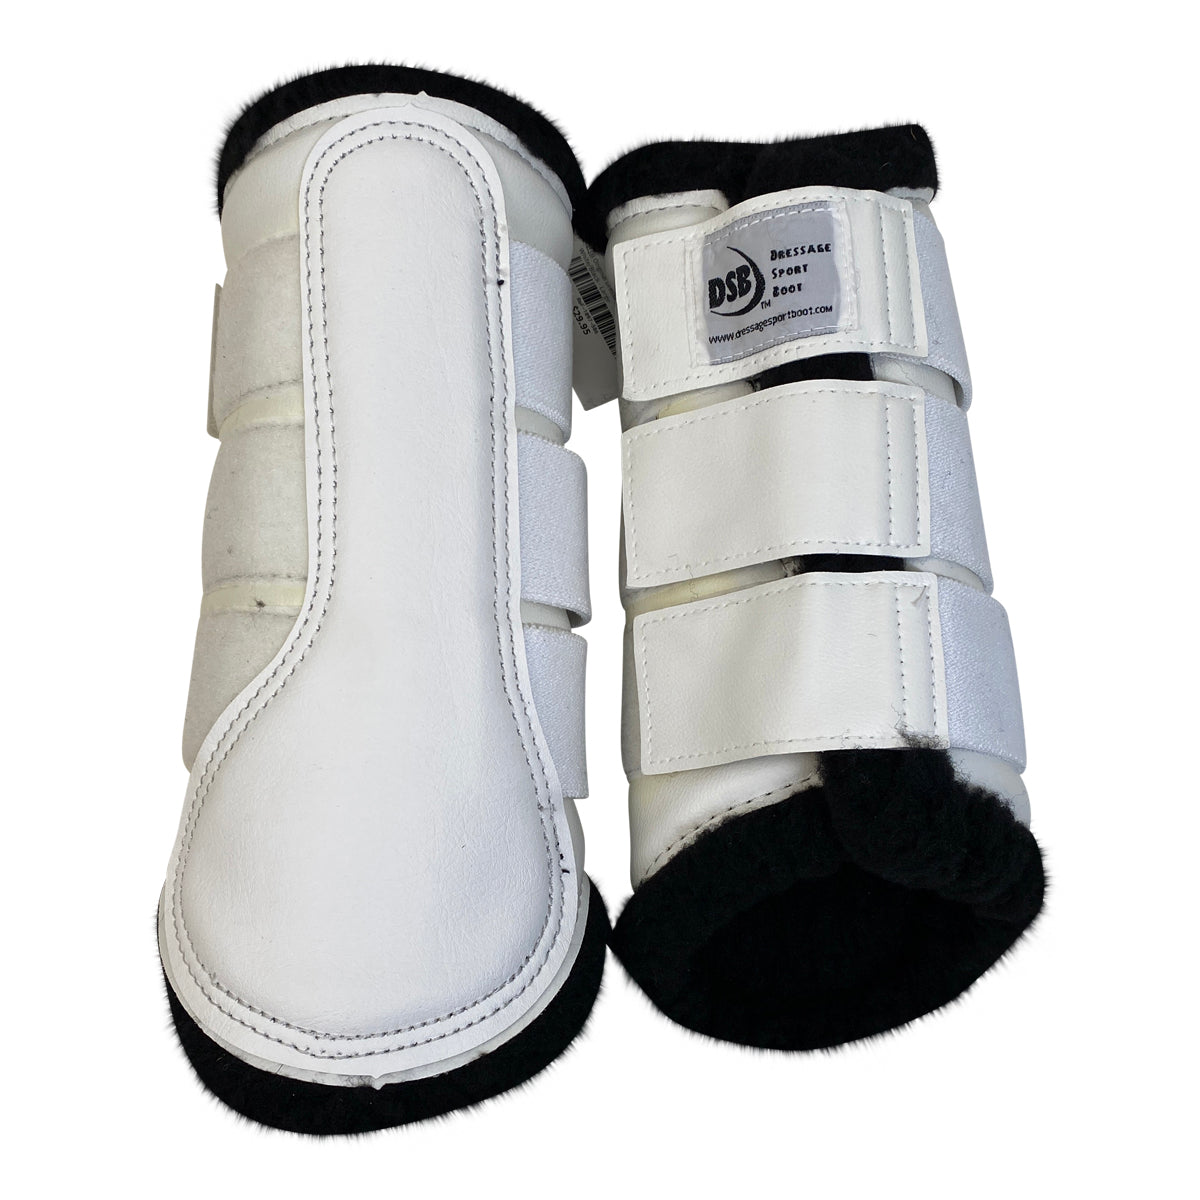 DSB Original Dressage Sport Boot in White/Black